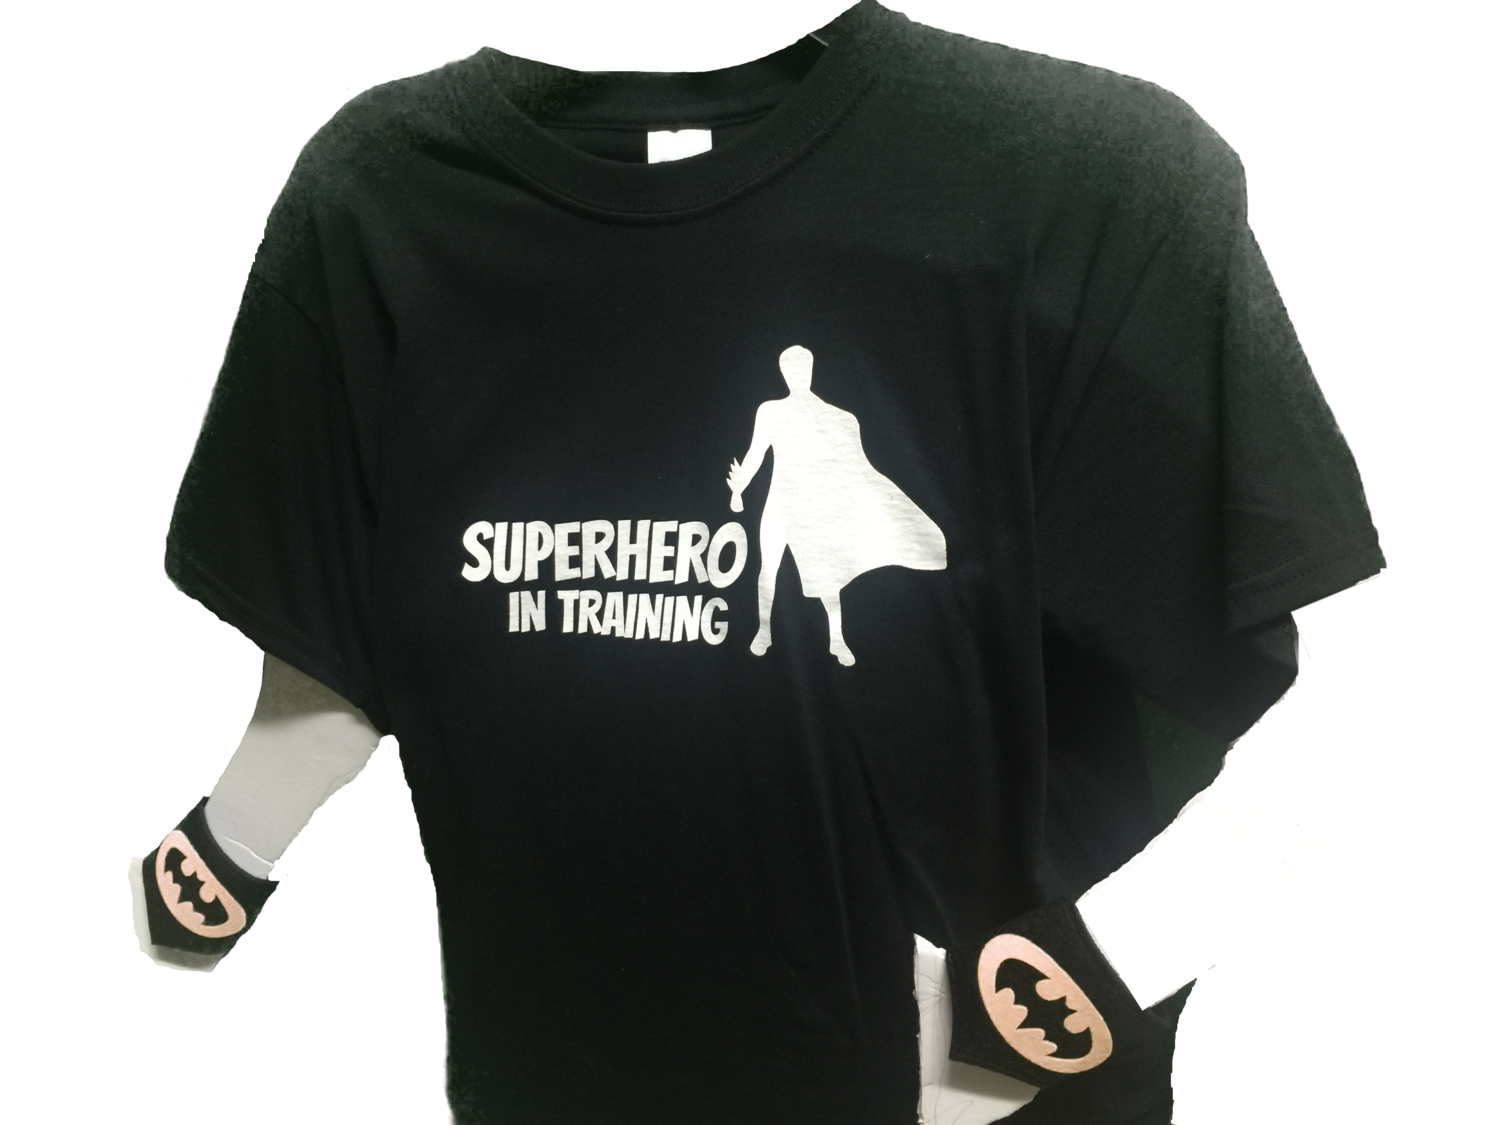 Superhero in Training t-shirt (kids sizes)